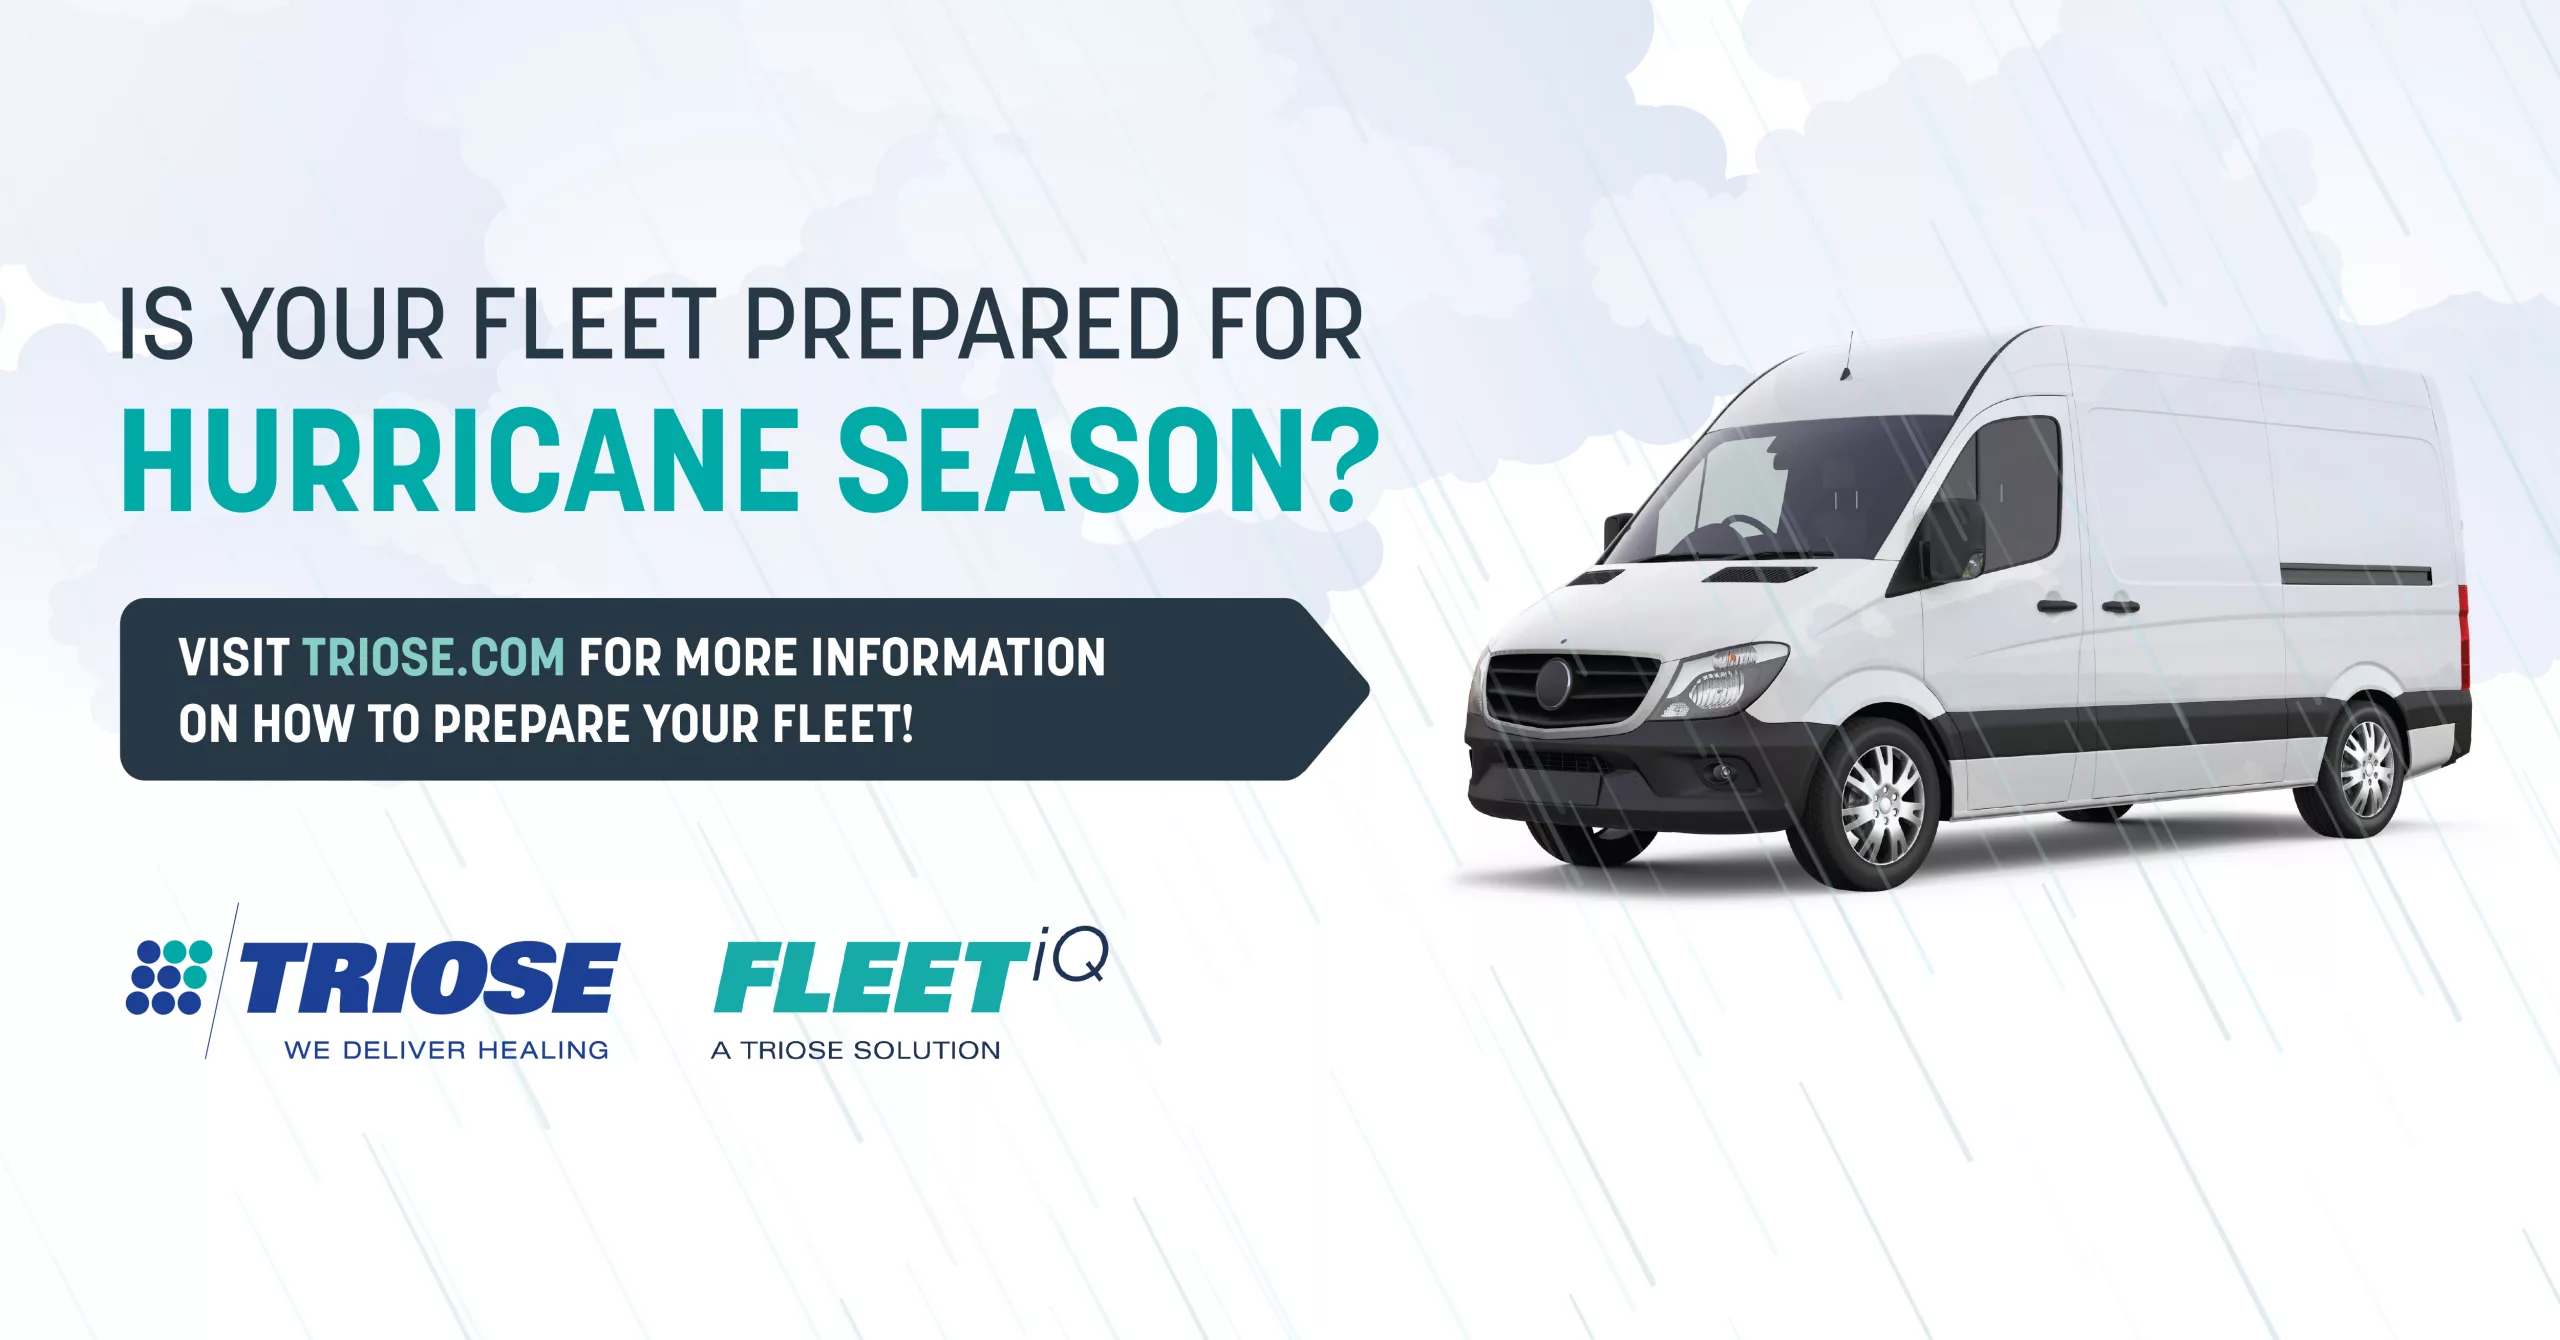 TRIOSE van; Is your fleet prepared for hurricane season?